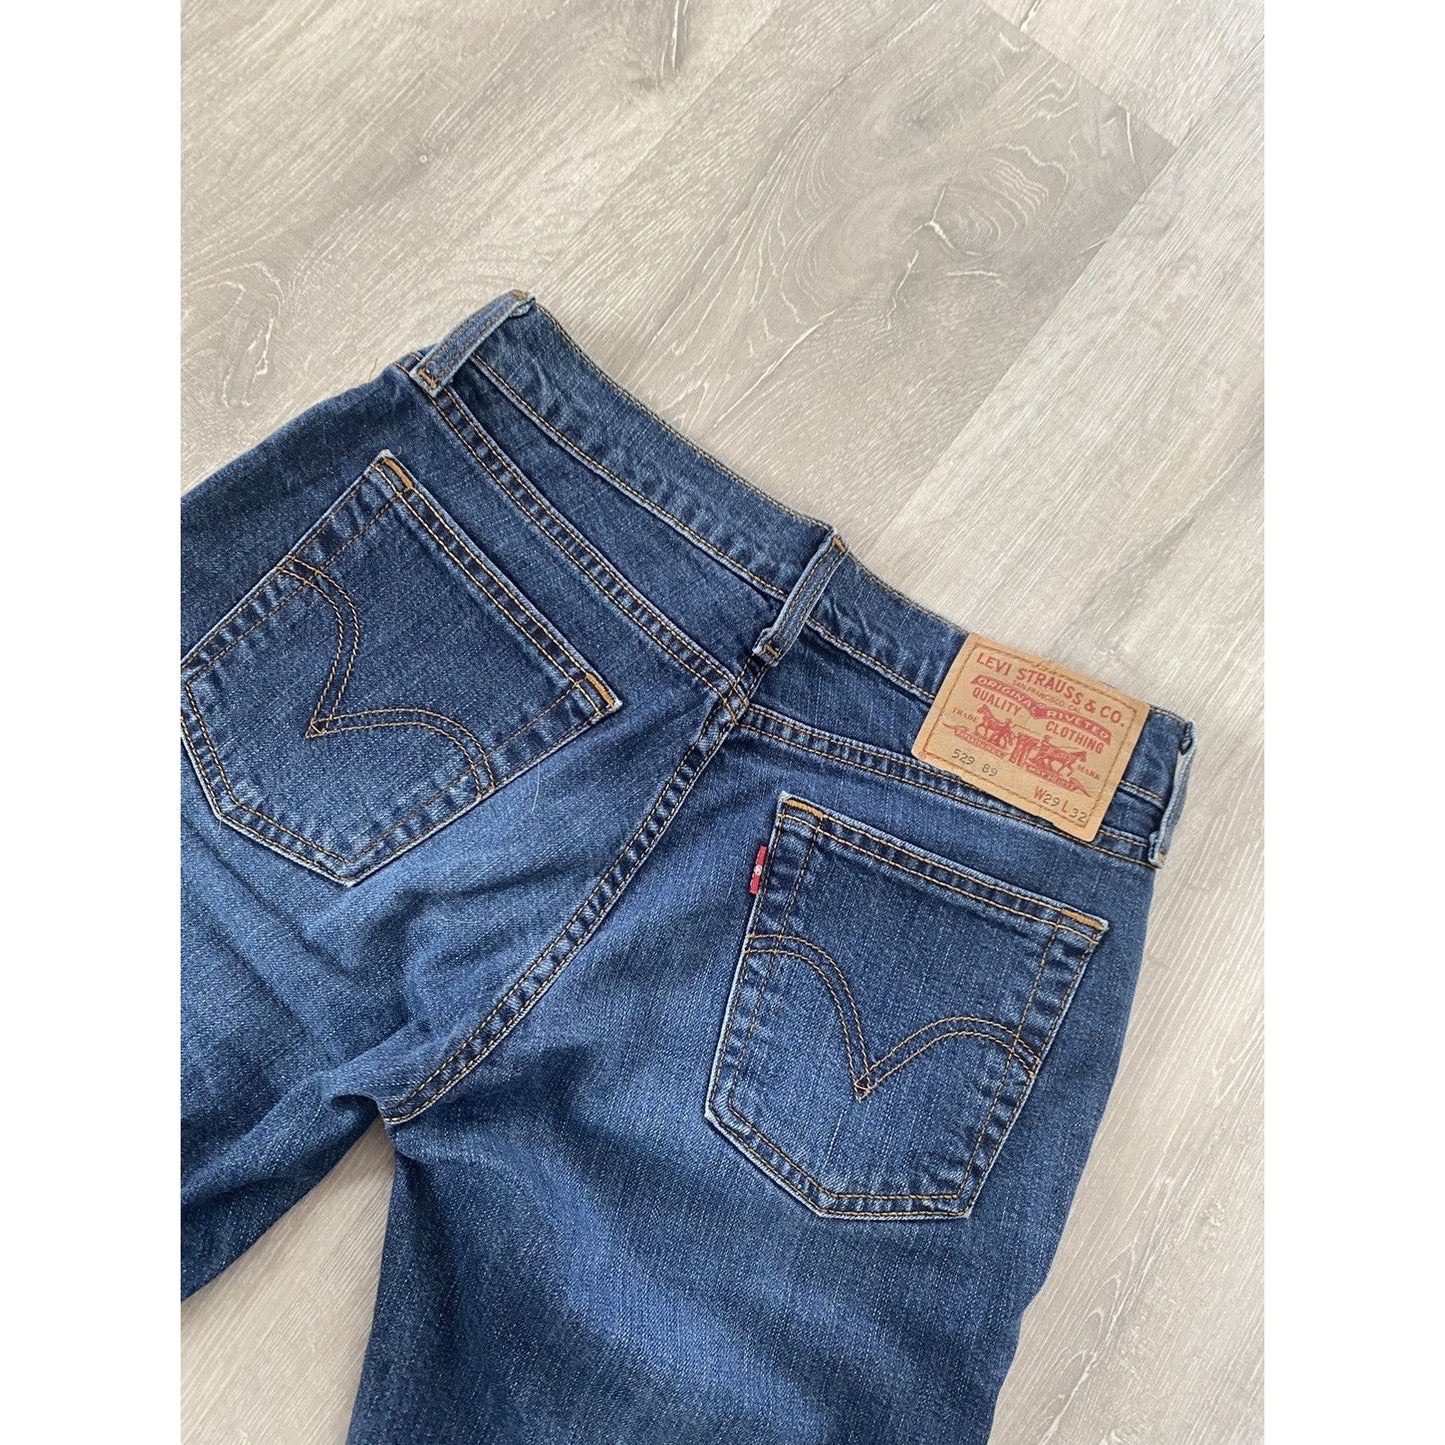 Levi’s 529 89 vintage blue denim shorts jeans jorts